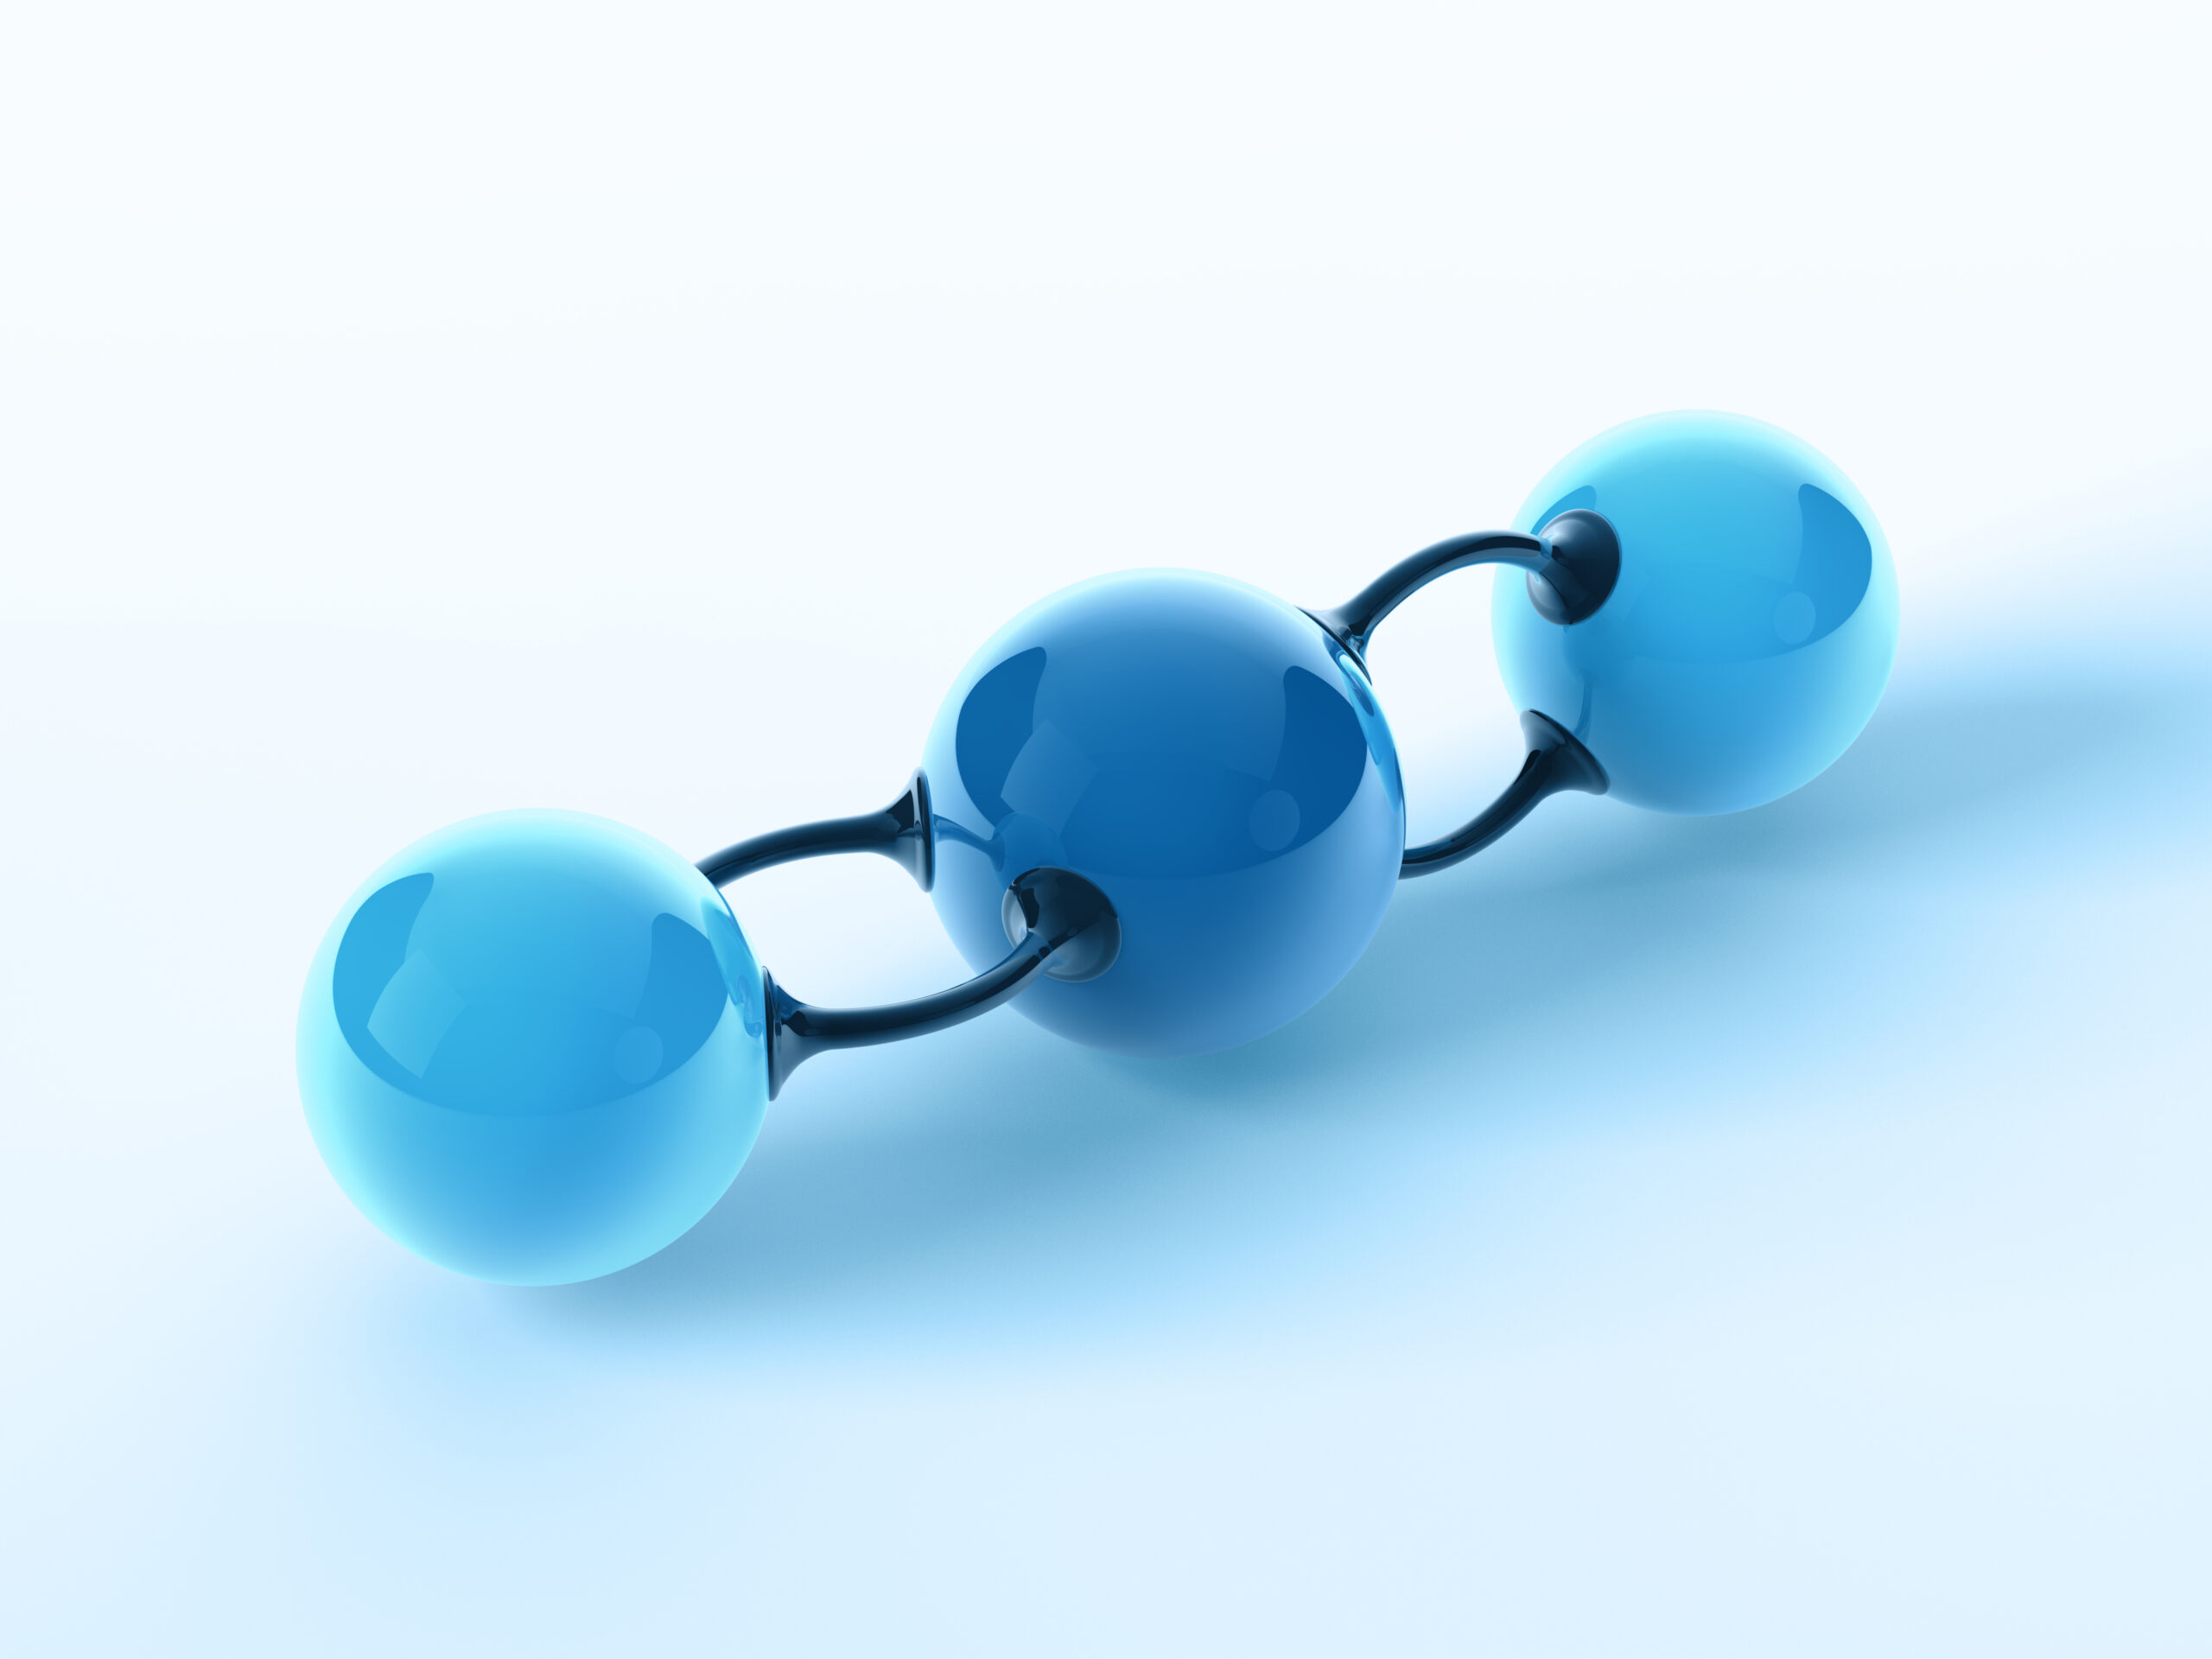 Carbon dioxide molecule shown in blue. Illustration